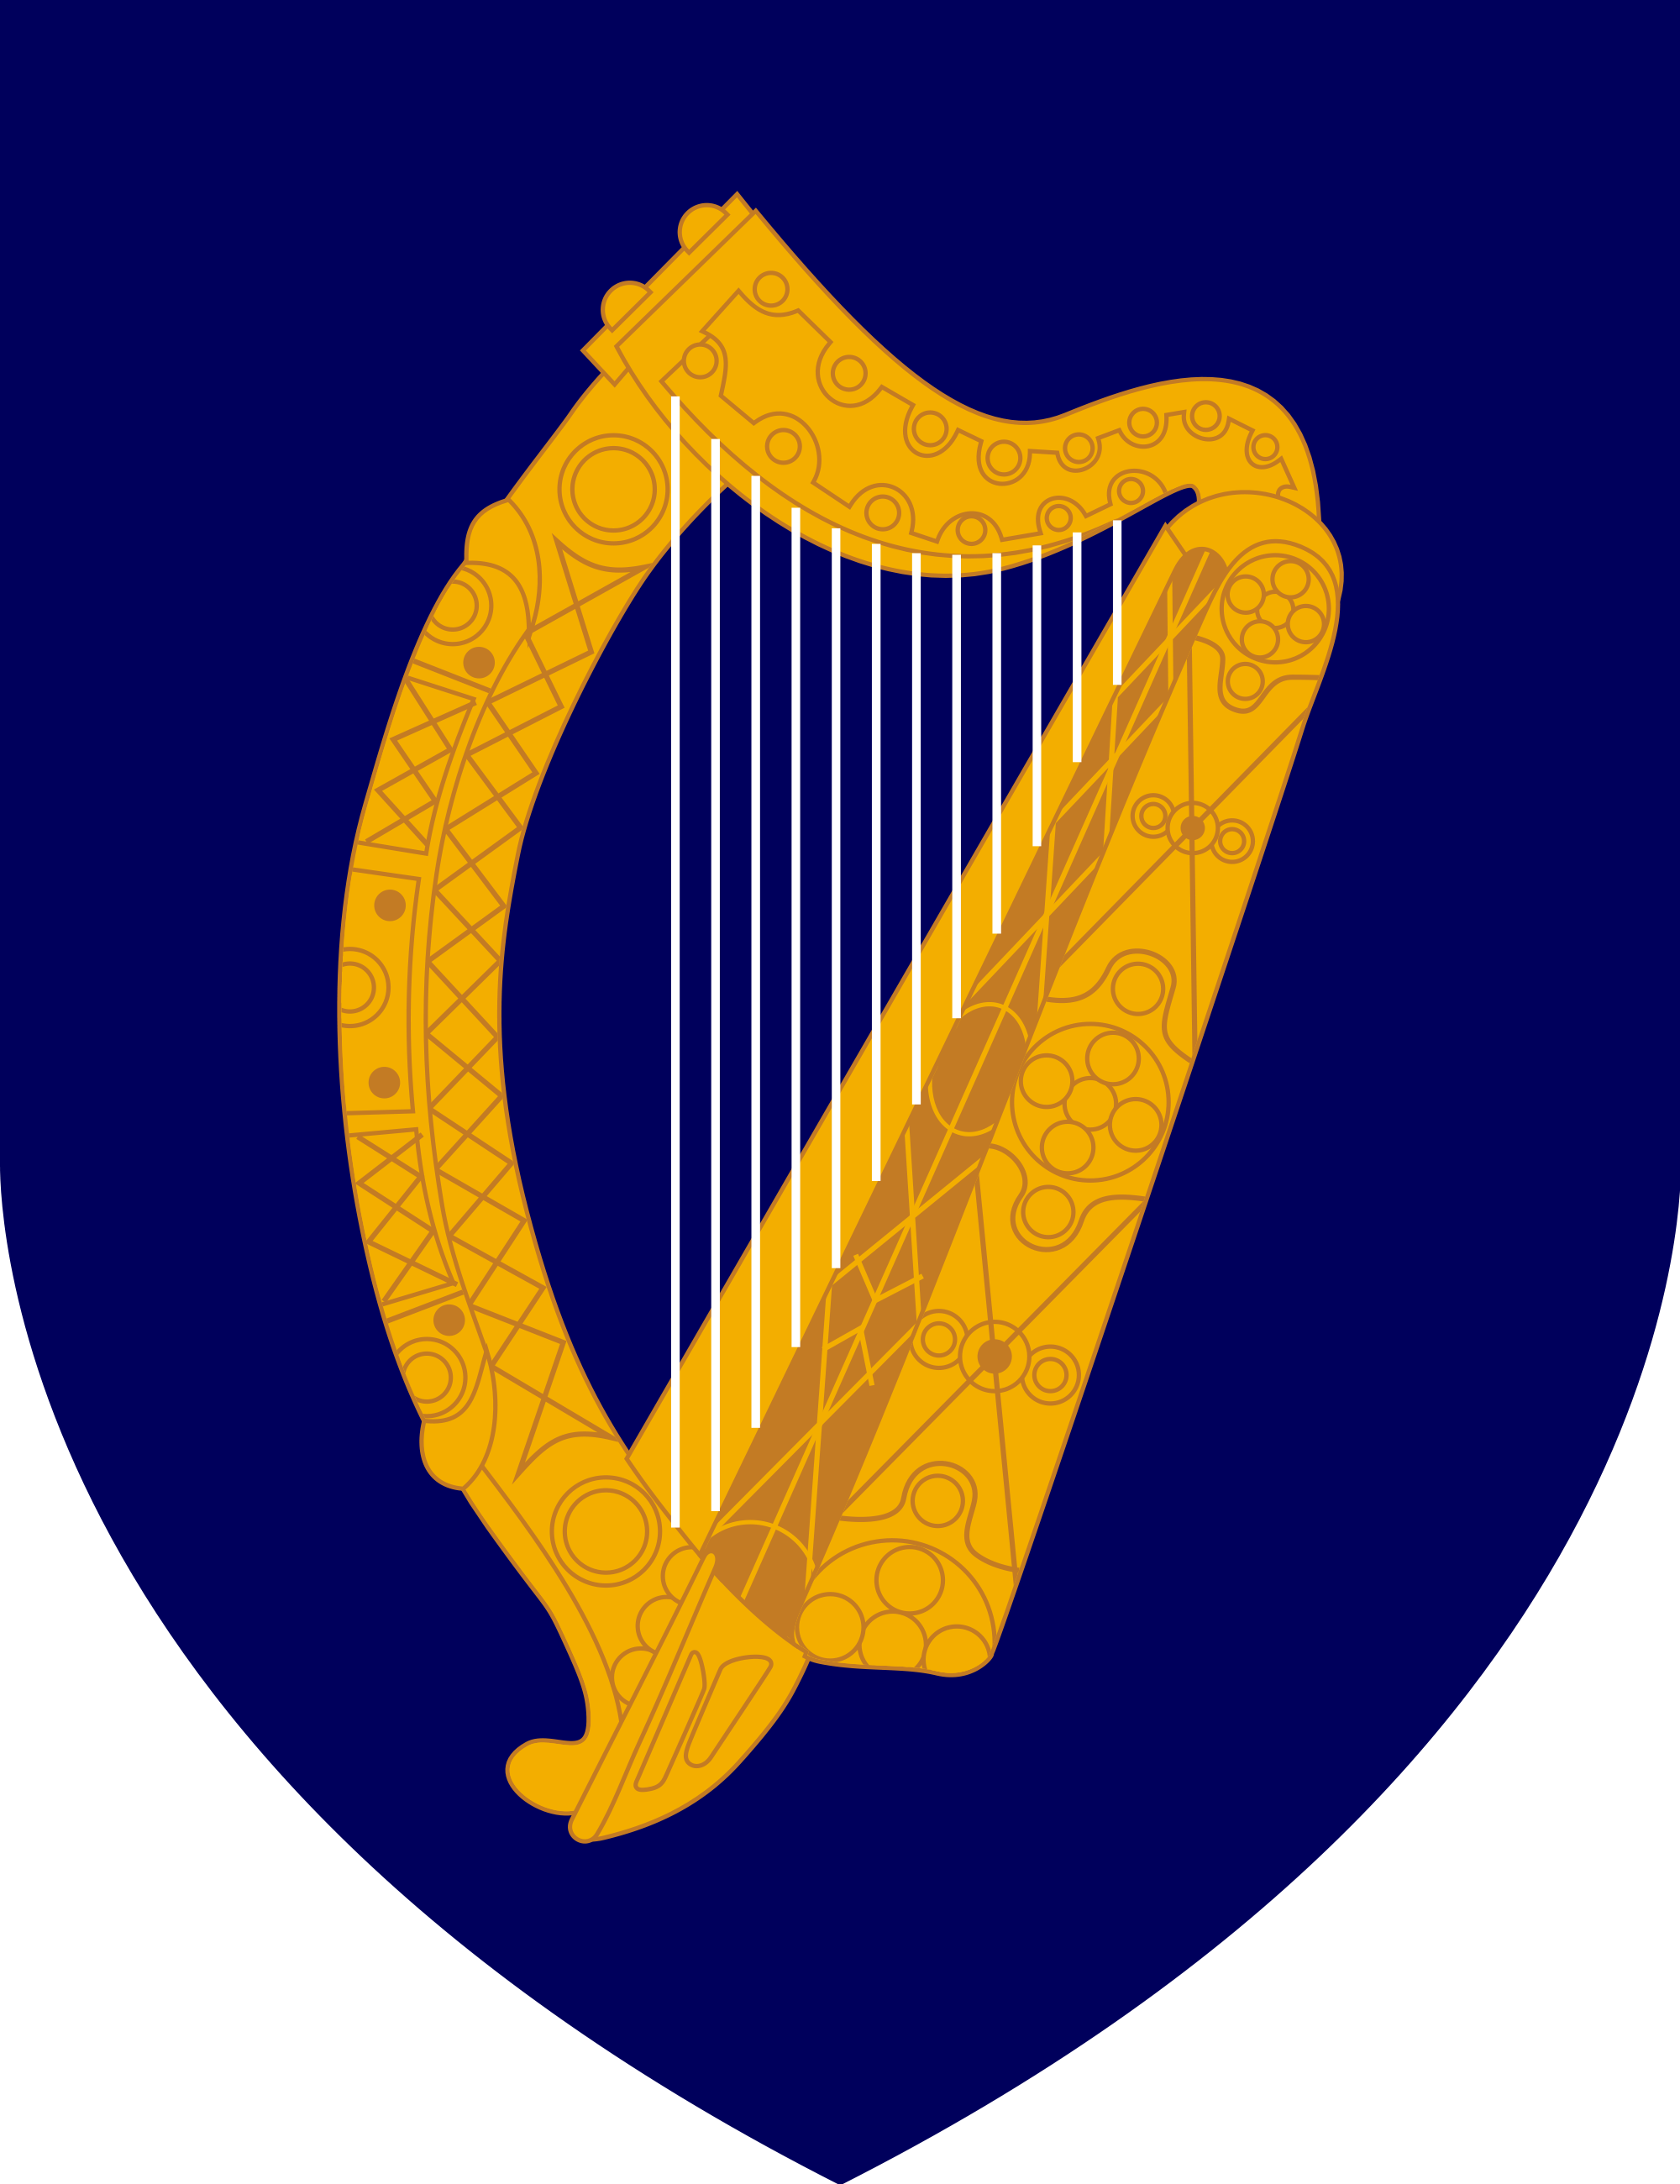 Emblem of Ireland